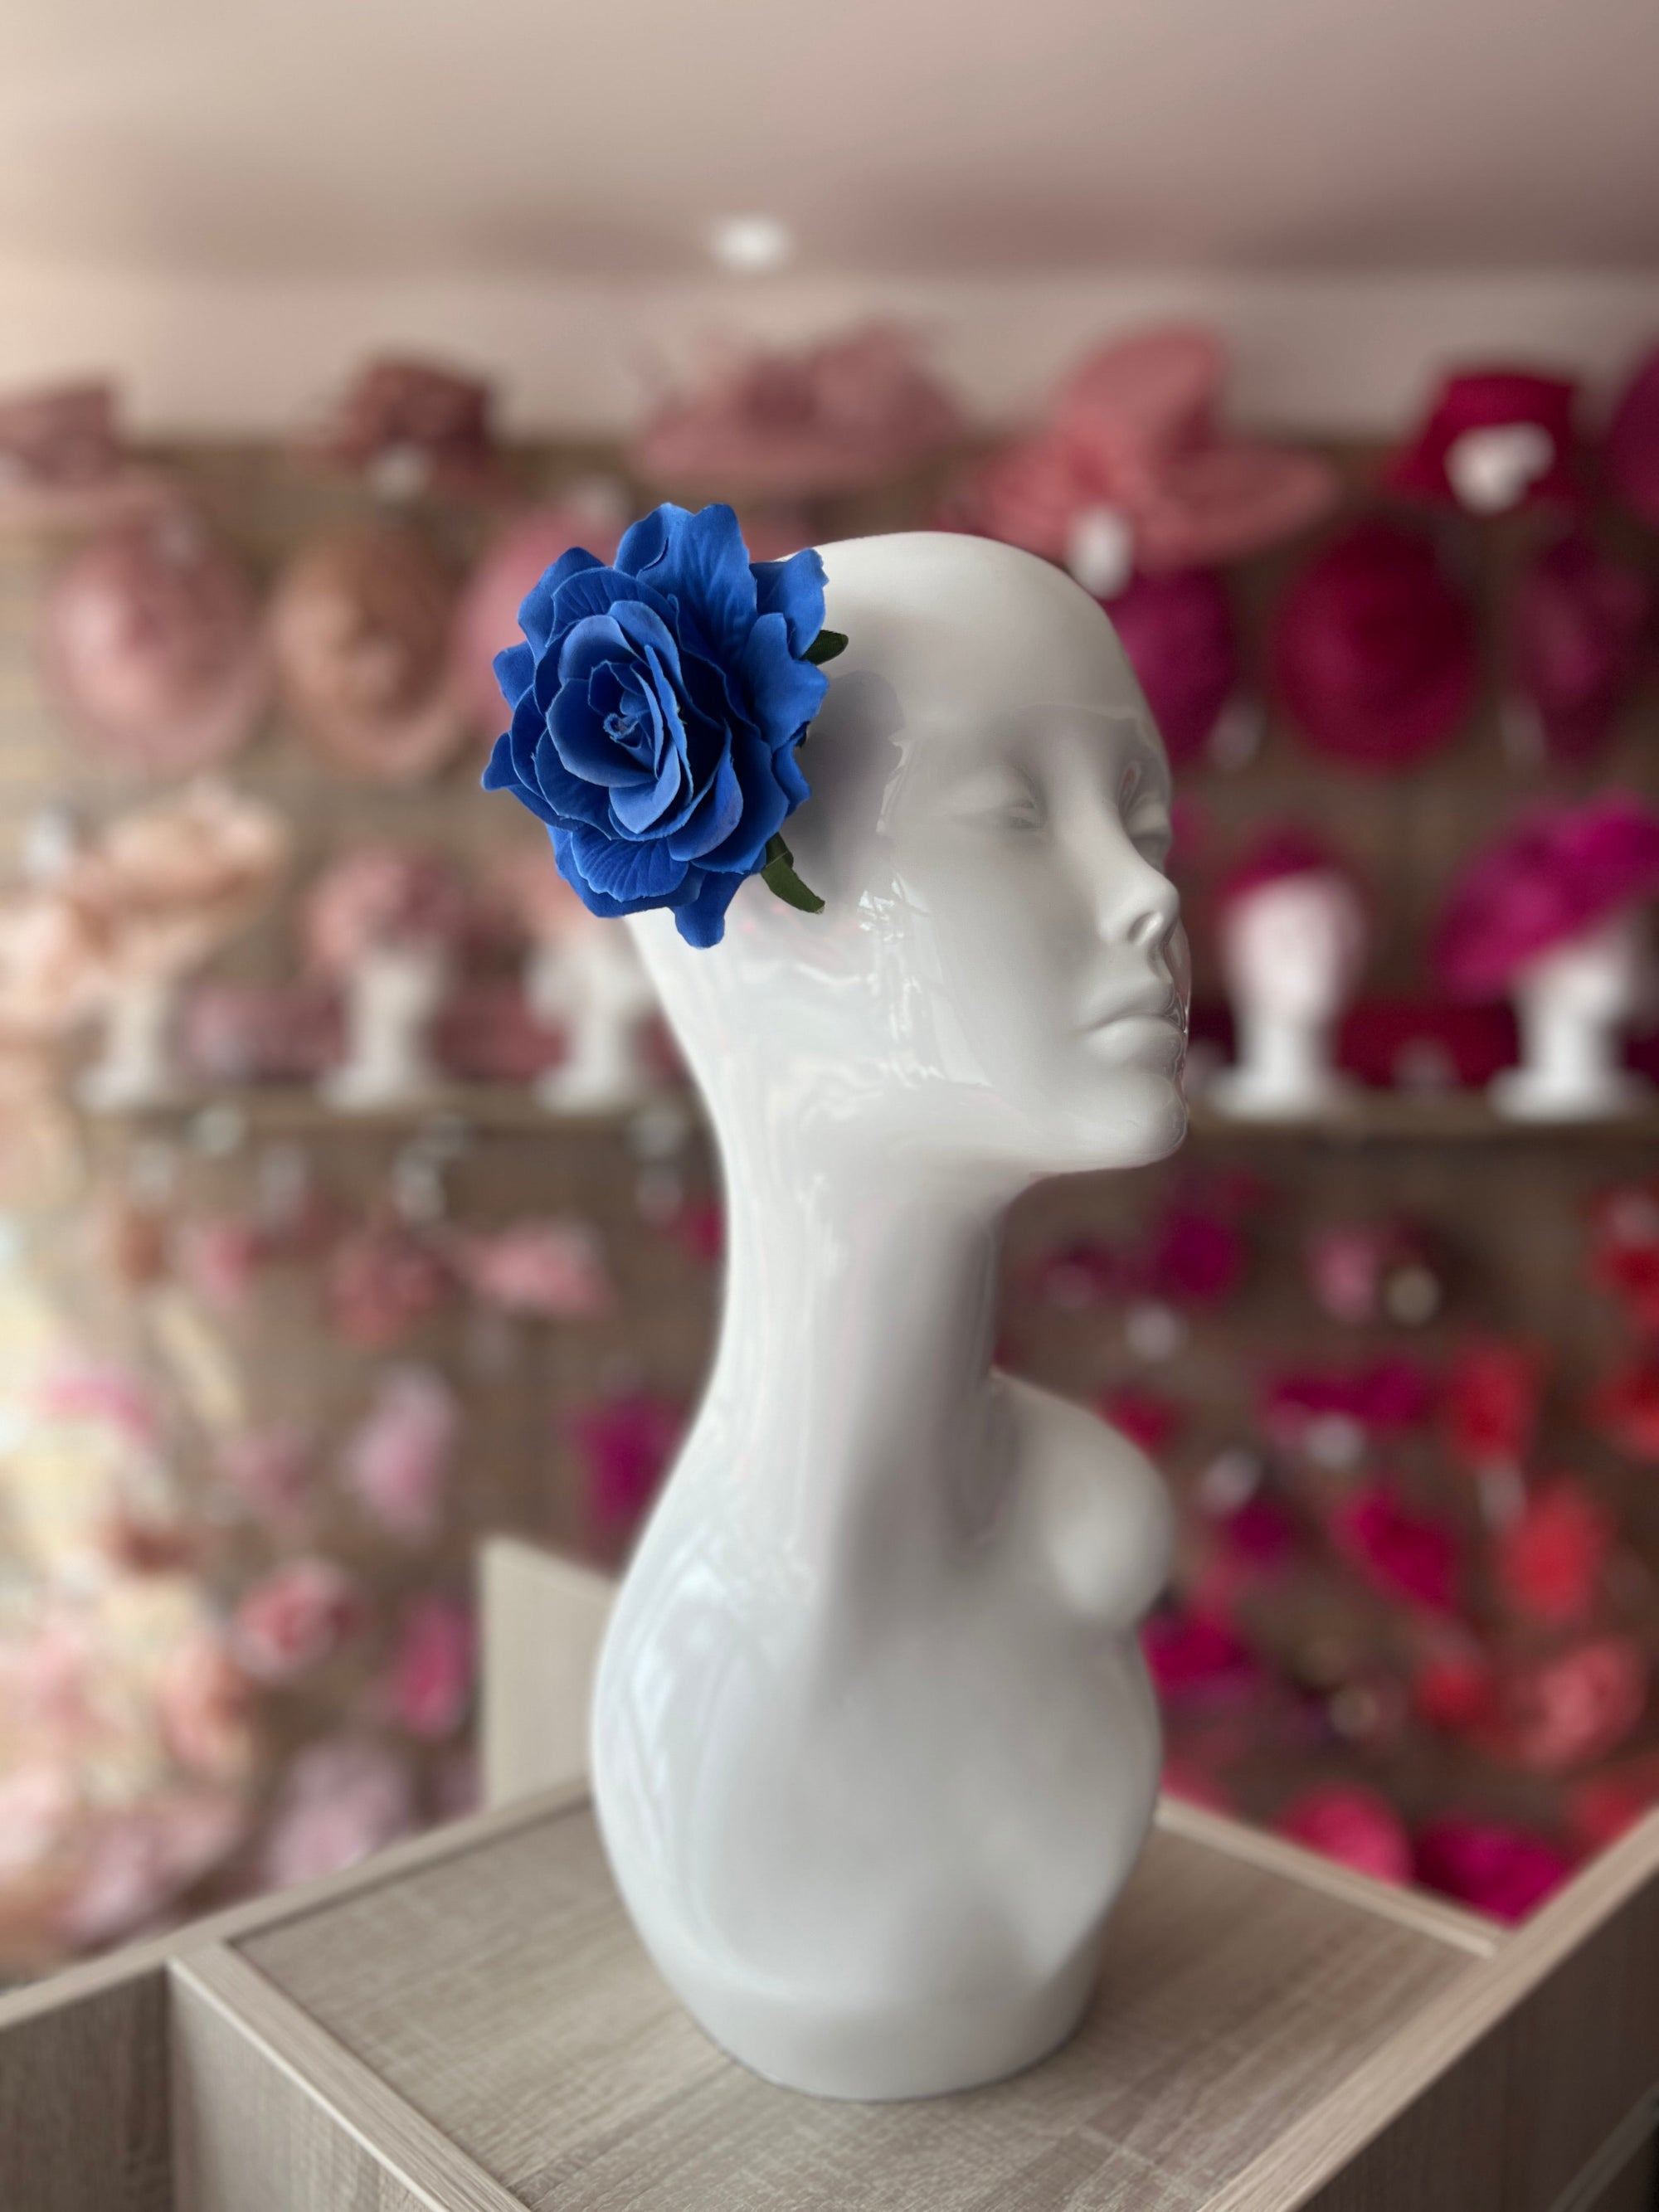 Blue Rose Hair Clip-Fascinators Direct